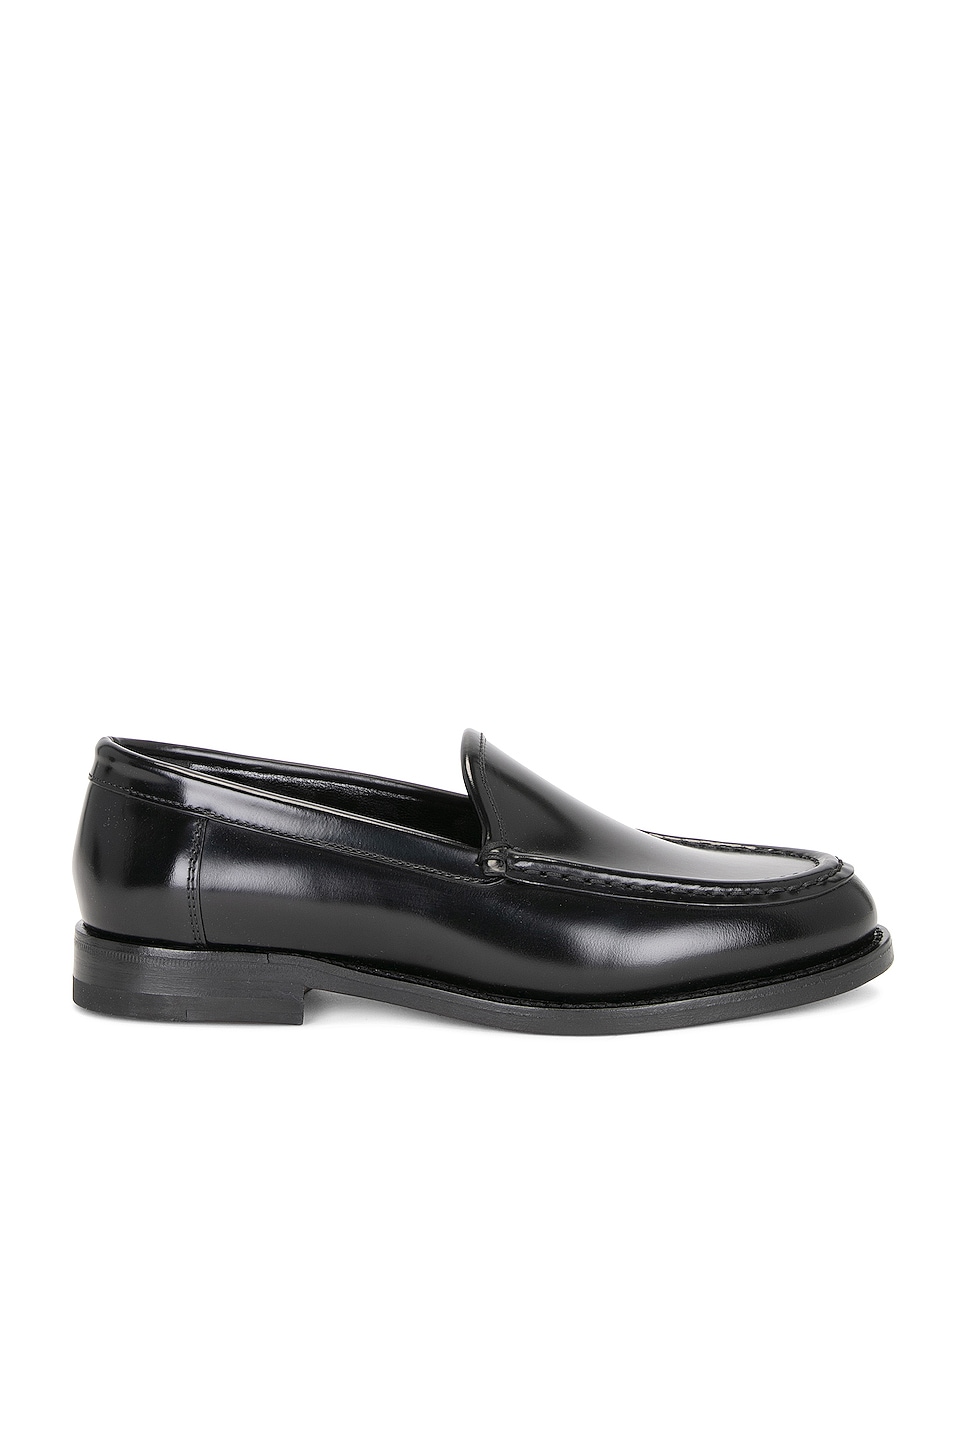 Image 1 of Manolo Blahnik Dineguardo Leather Loafer in Black